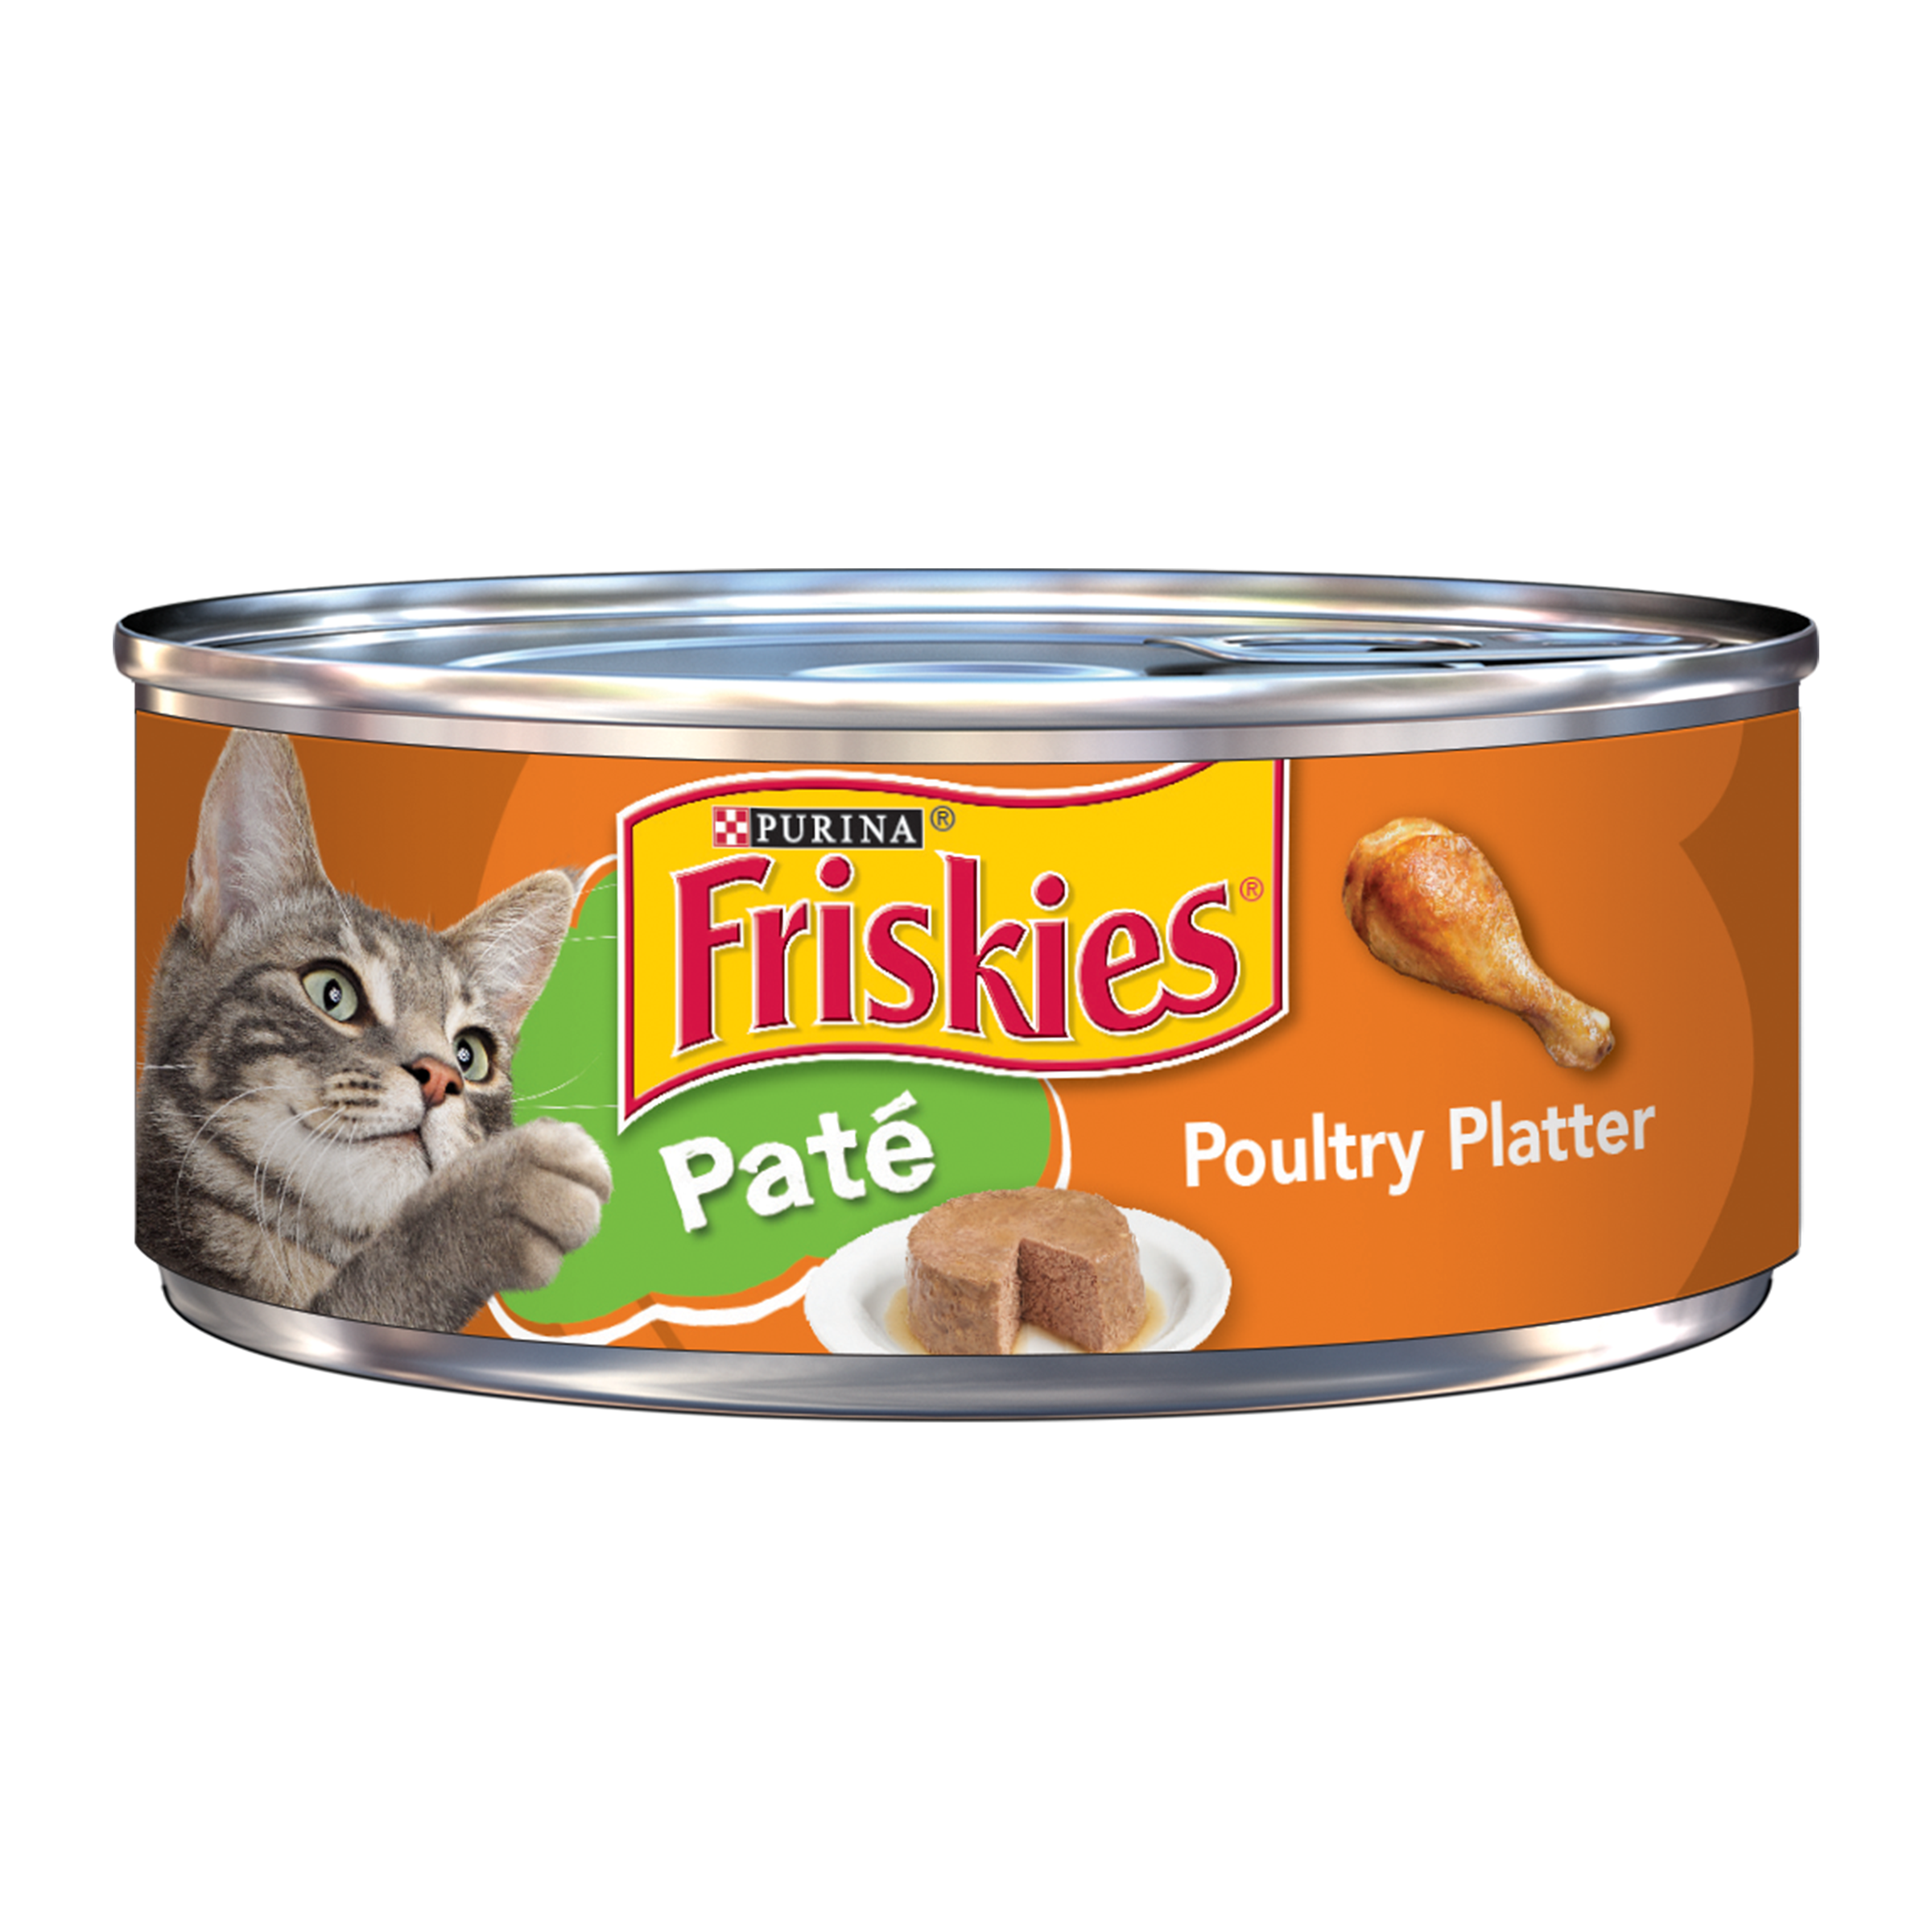 Whiskas Cat Food Costco